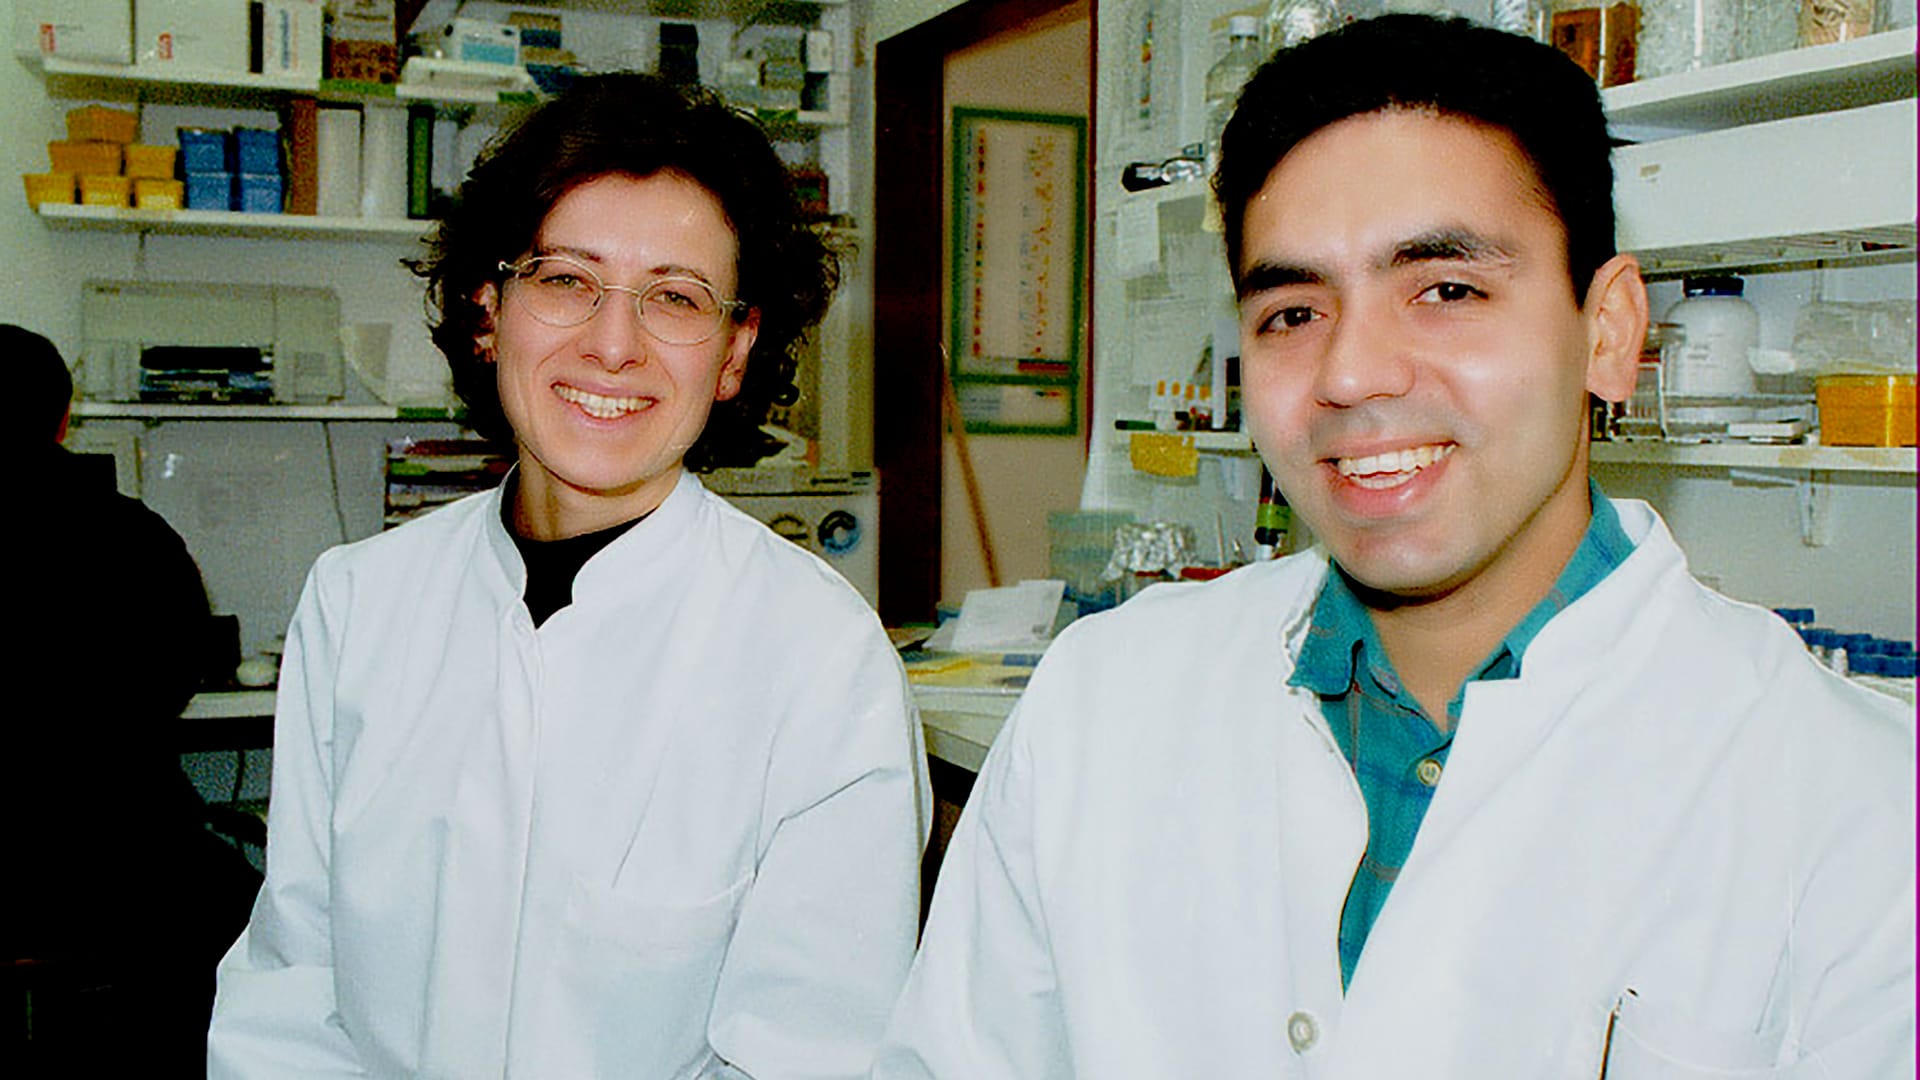 Portrait of the young research team Dr. Özlem Türeci and Dr. Uğur Şahin